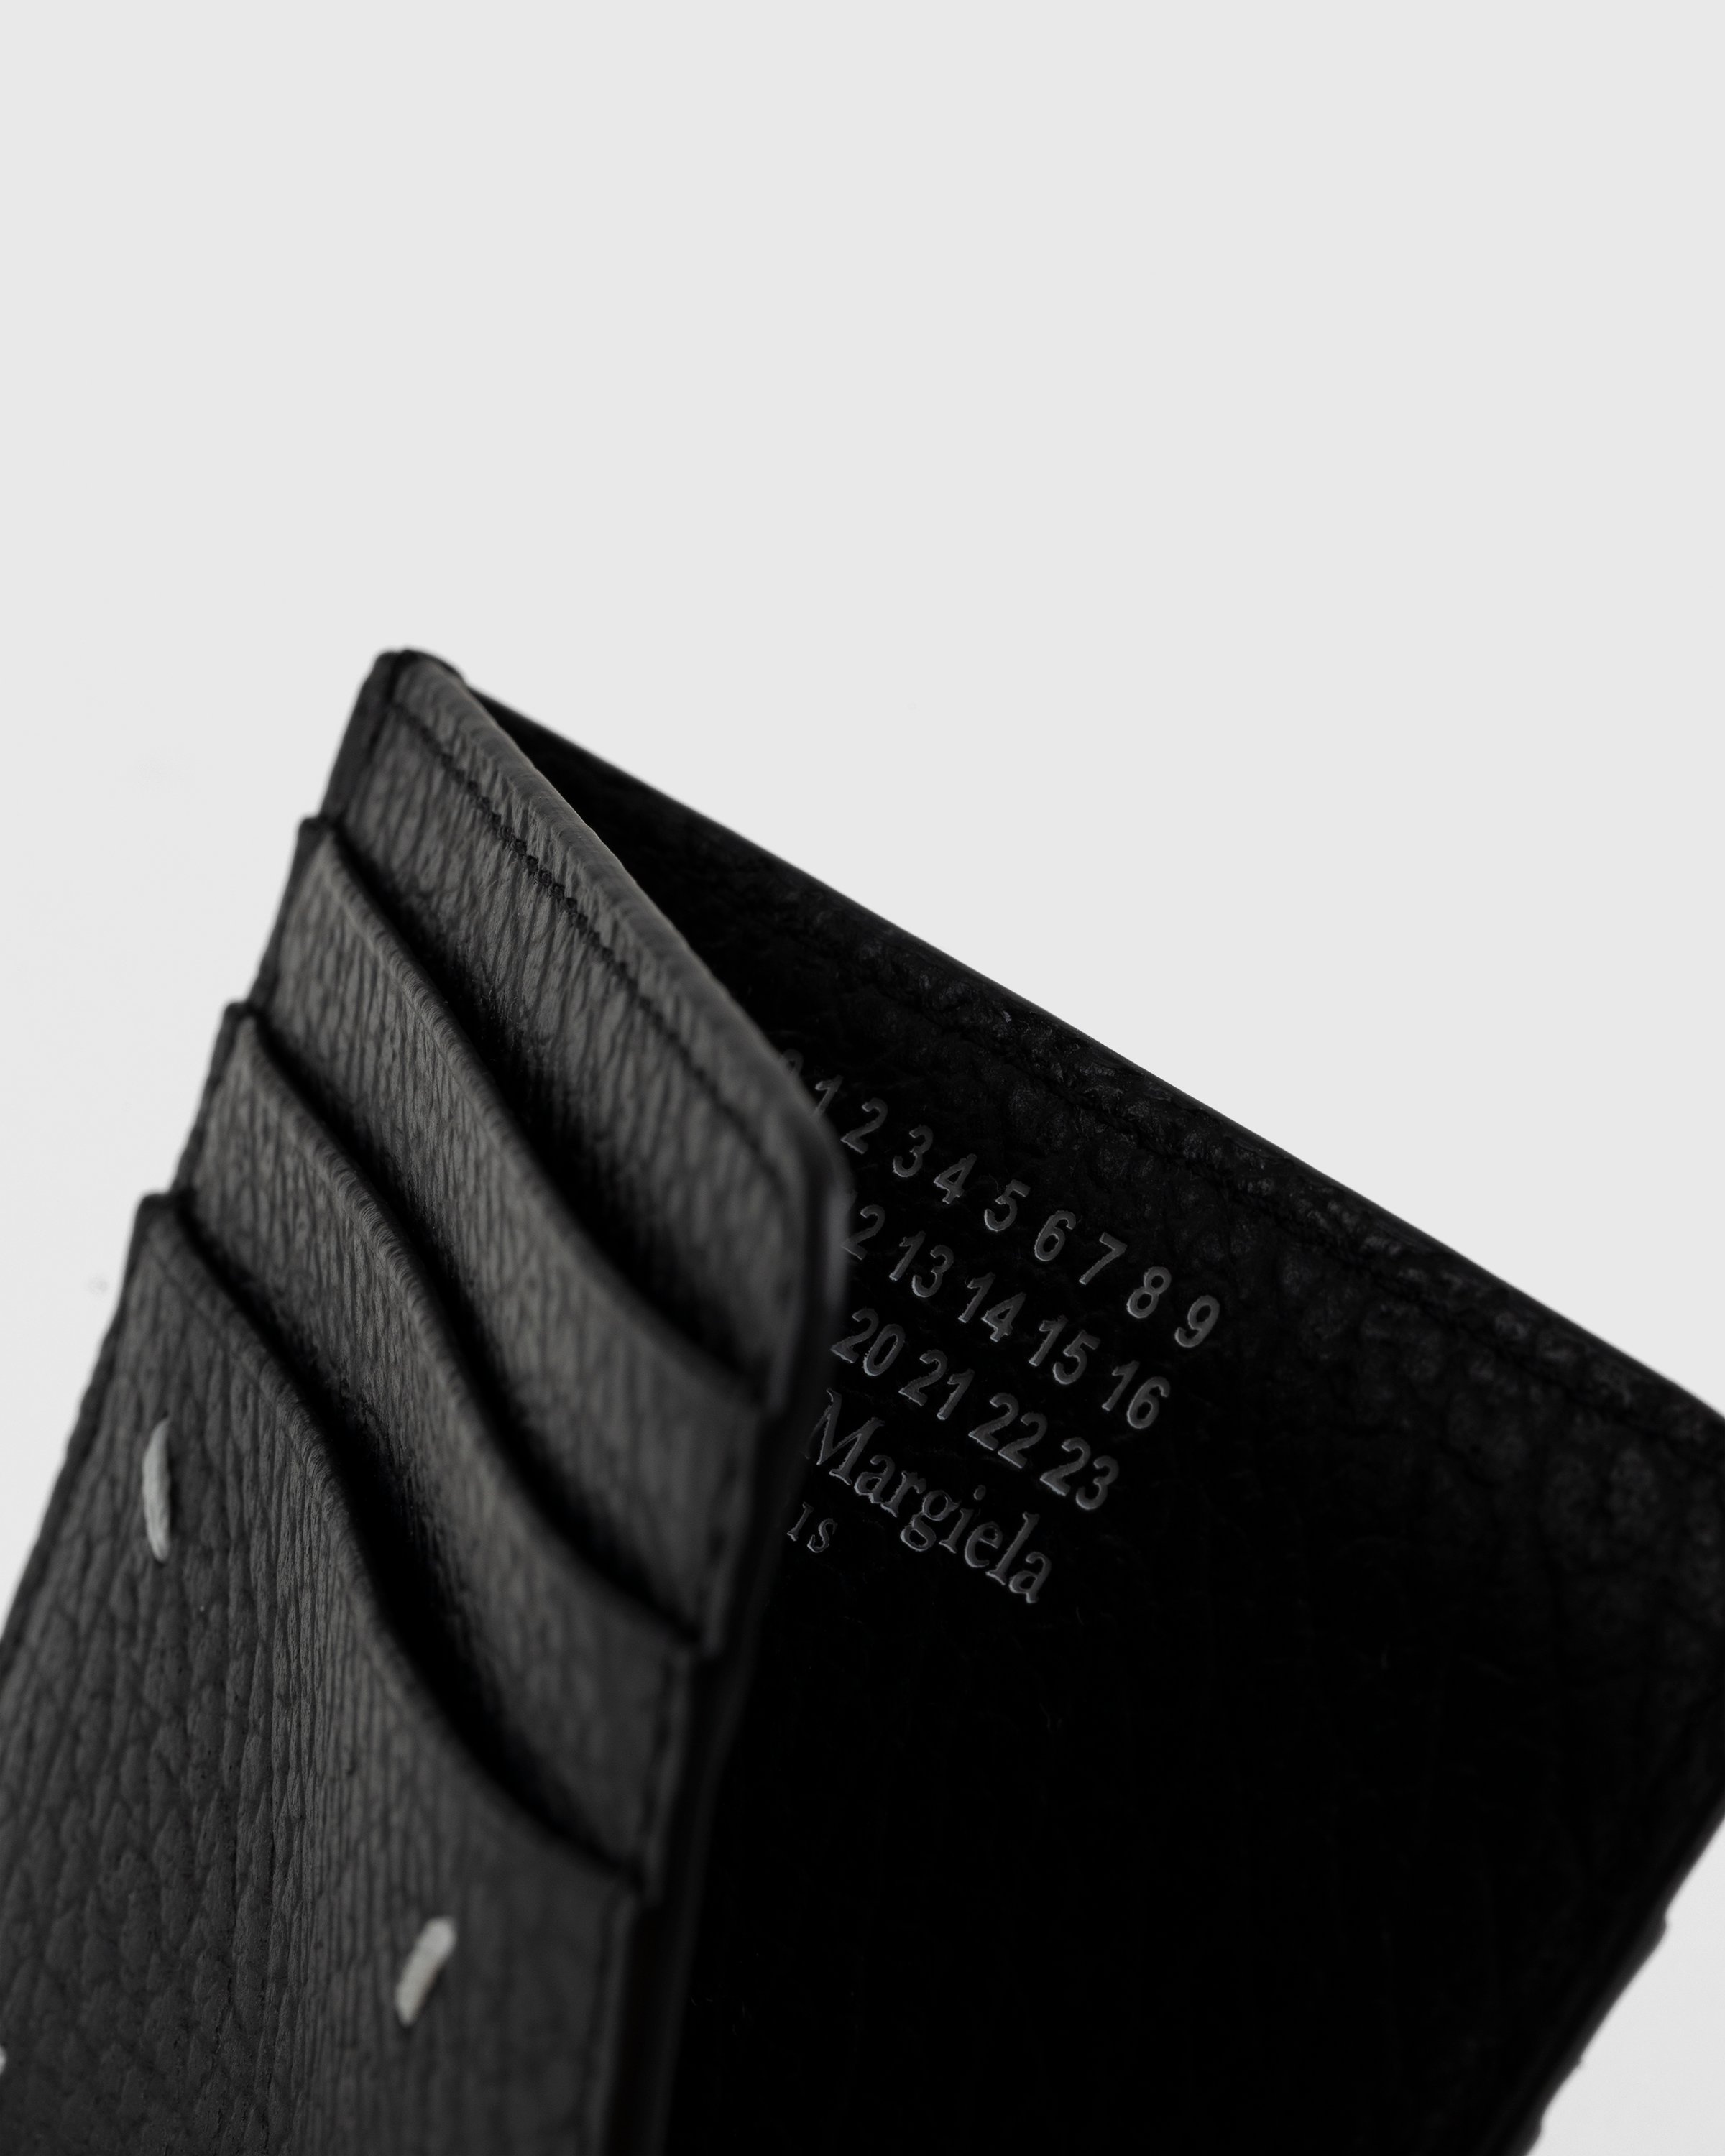 Maison Margiela - Leather Card Holder Black - Accessories - Black - Image 3